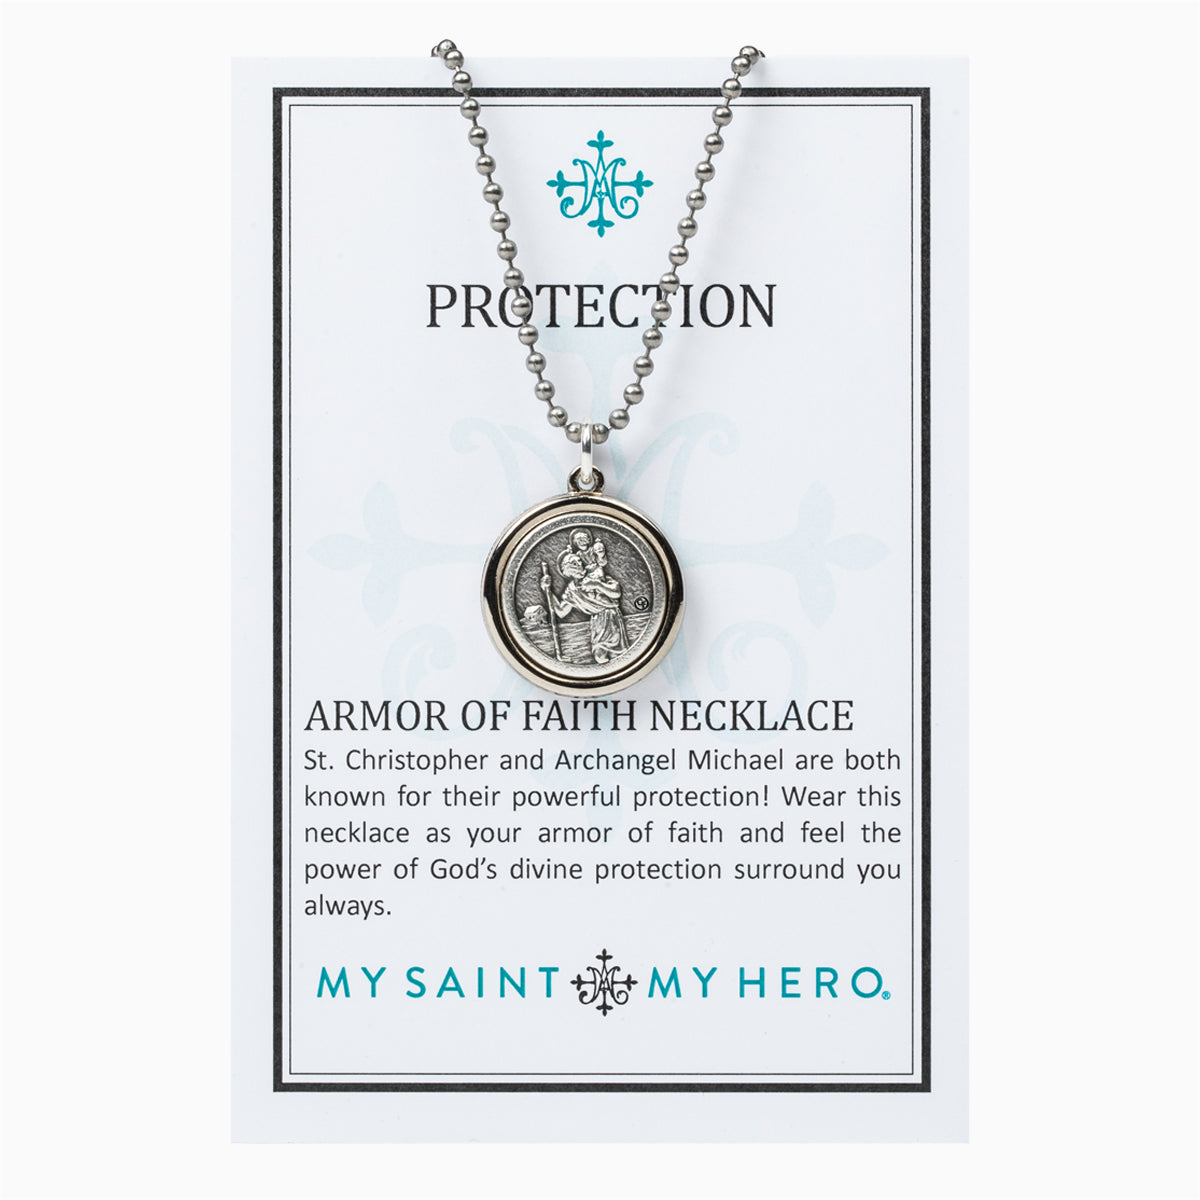 Archangel Michael & Saint Christopher Protection Armor of Faith Necklace - Bead Ball Chain by My Saint My Hero